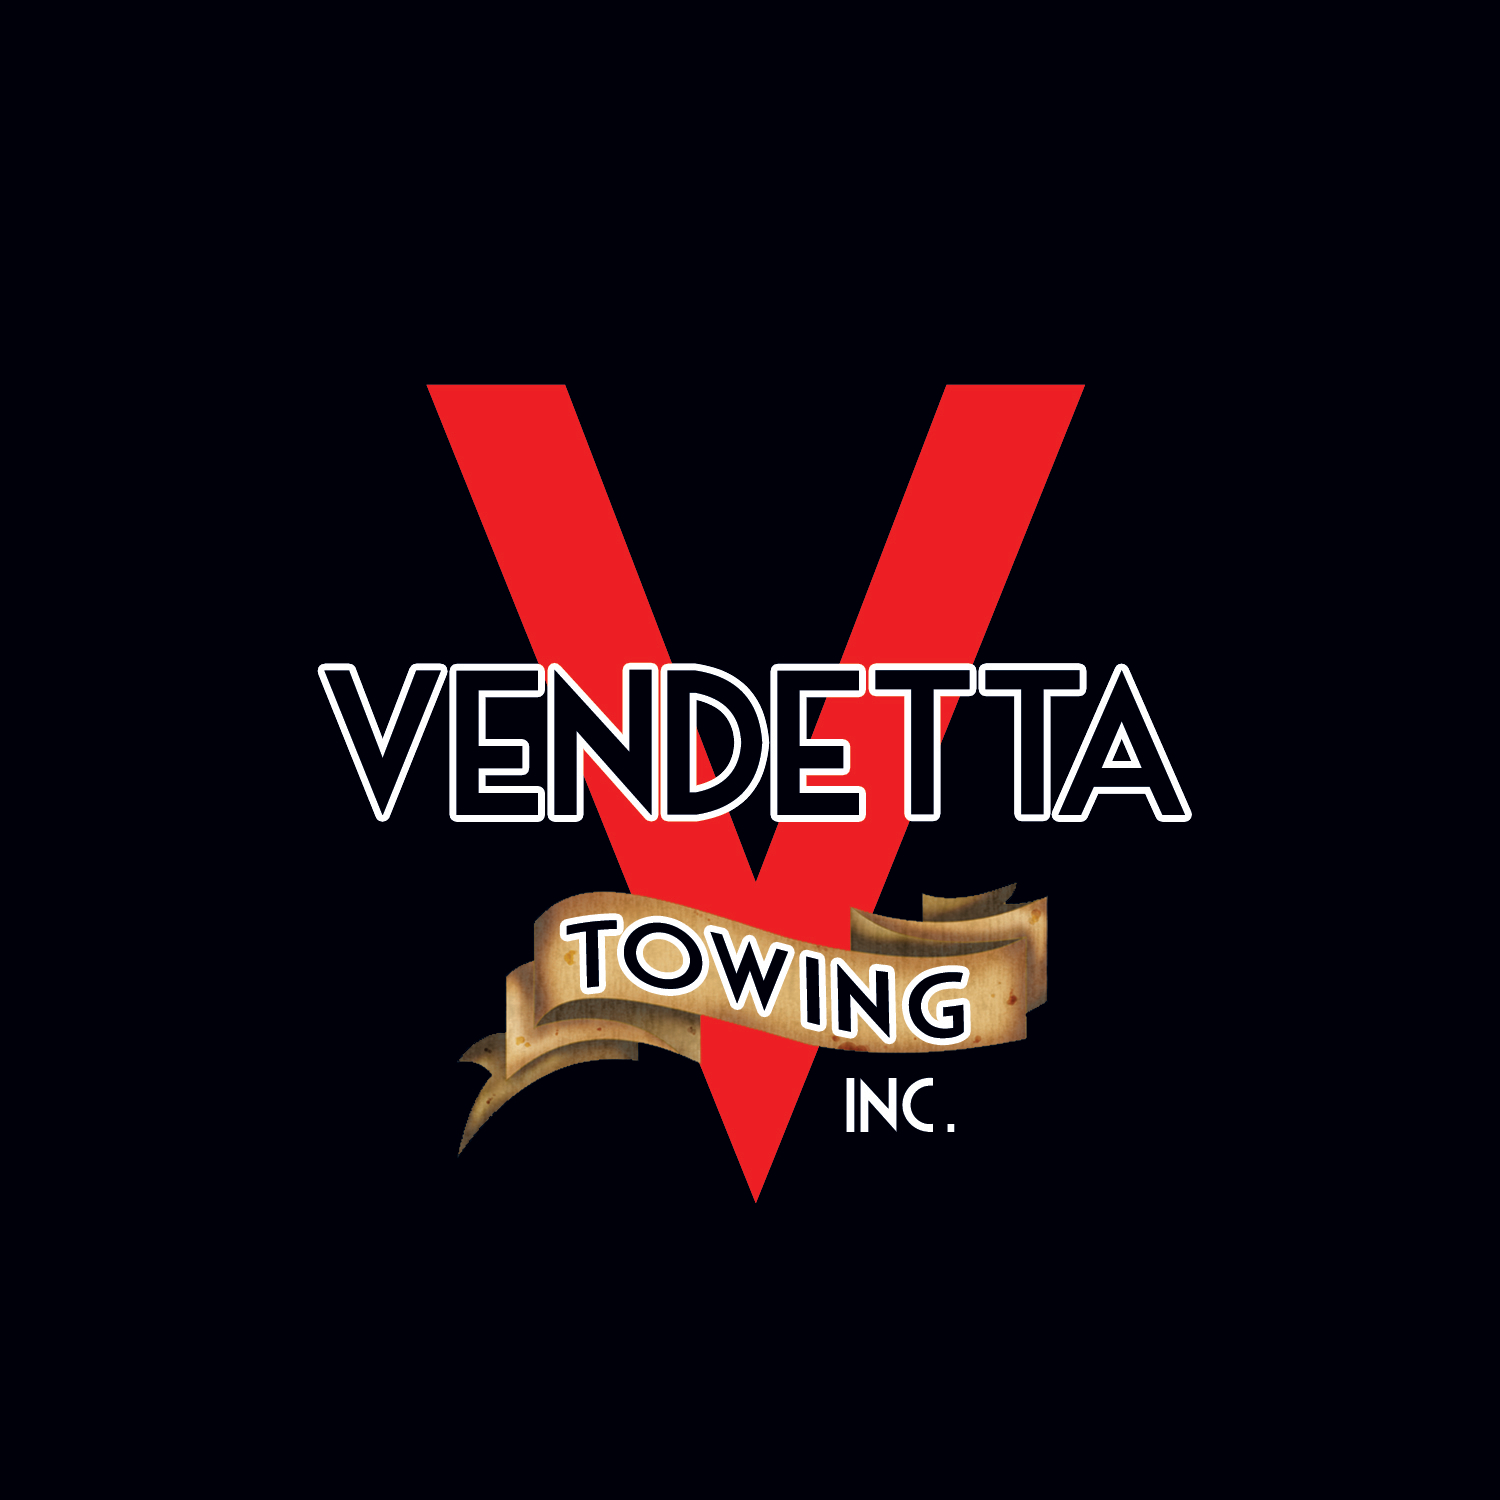 Vendetta Towing Inc